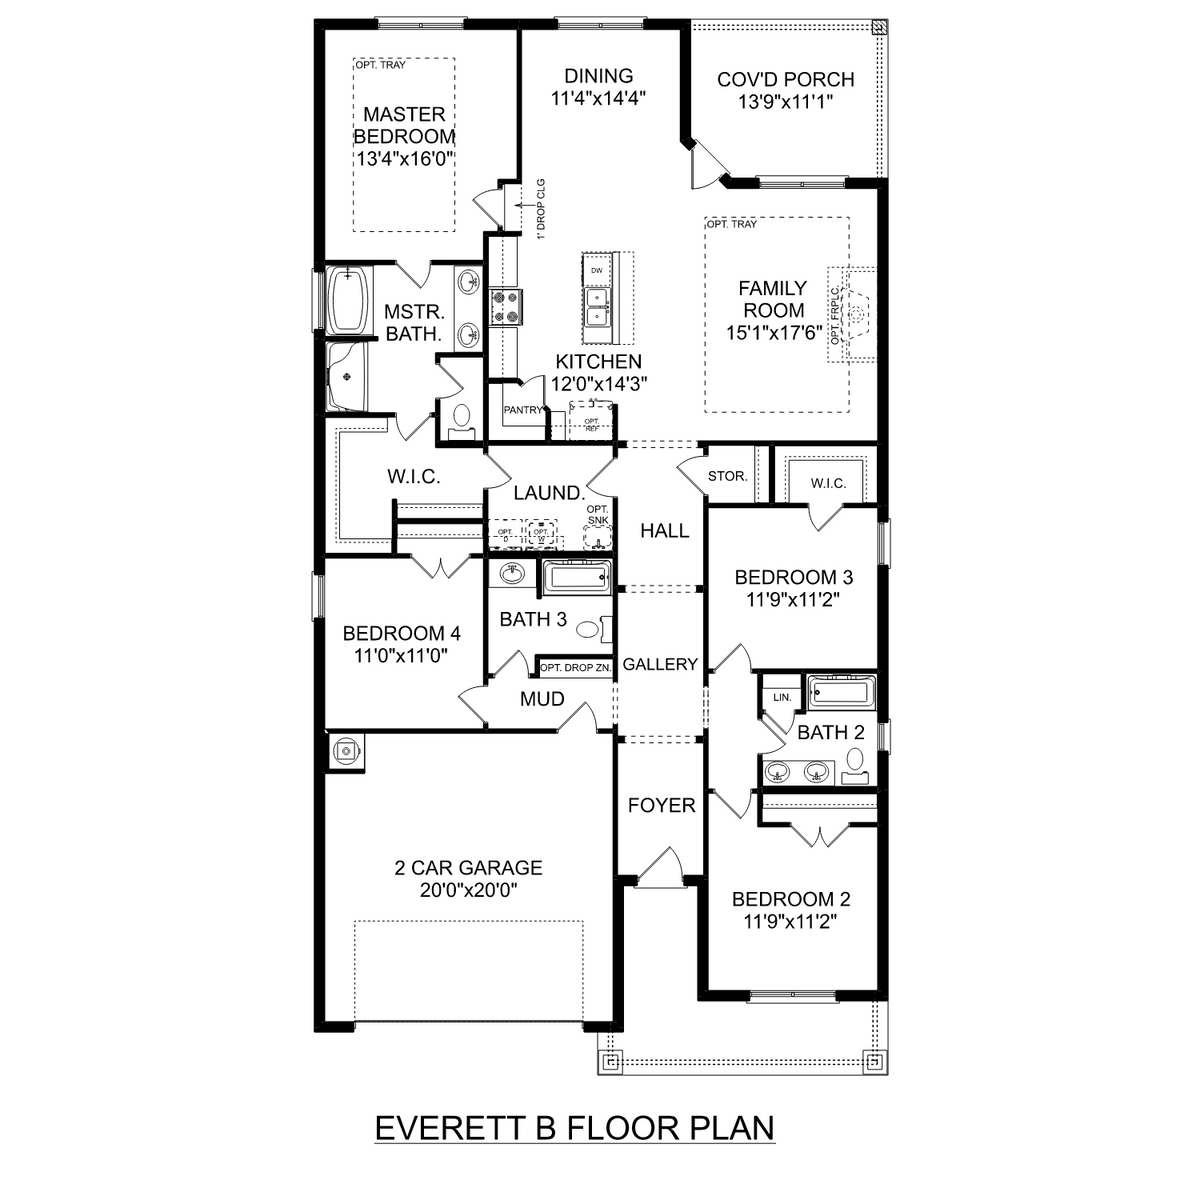 1 - The Everett B floor plan layout for 115 Burdine Street in Davidson Homes' Creek Grove community.